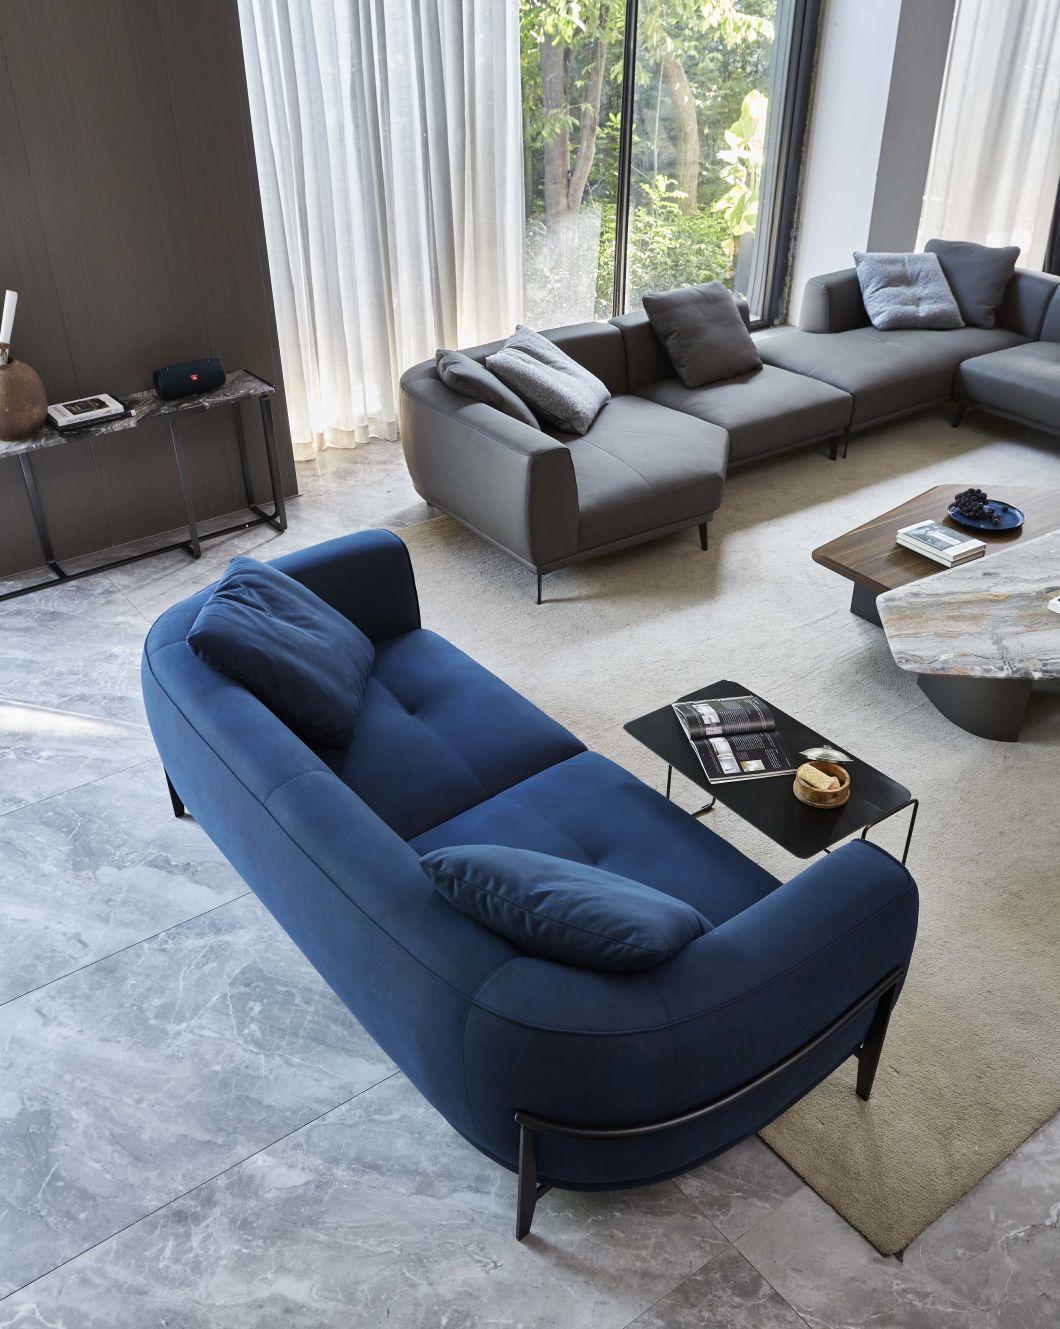 V10 3 Seat Sofa Latest Design, 3 Seat Fabric Sofa Design From Italian, Living Room Set in Home and Hotel Furniture Customization